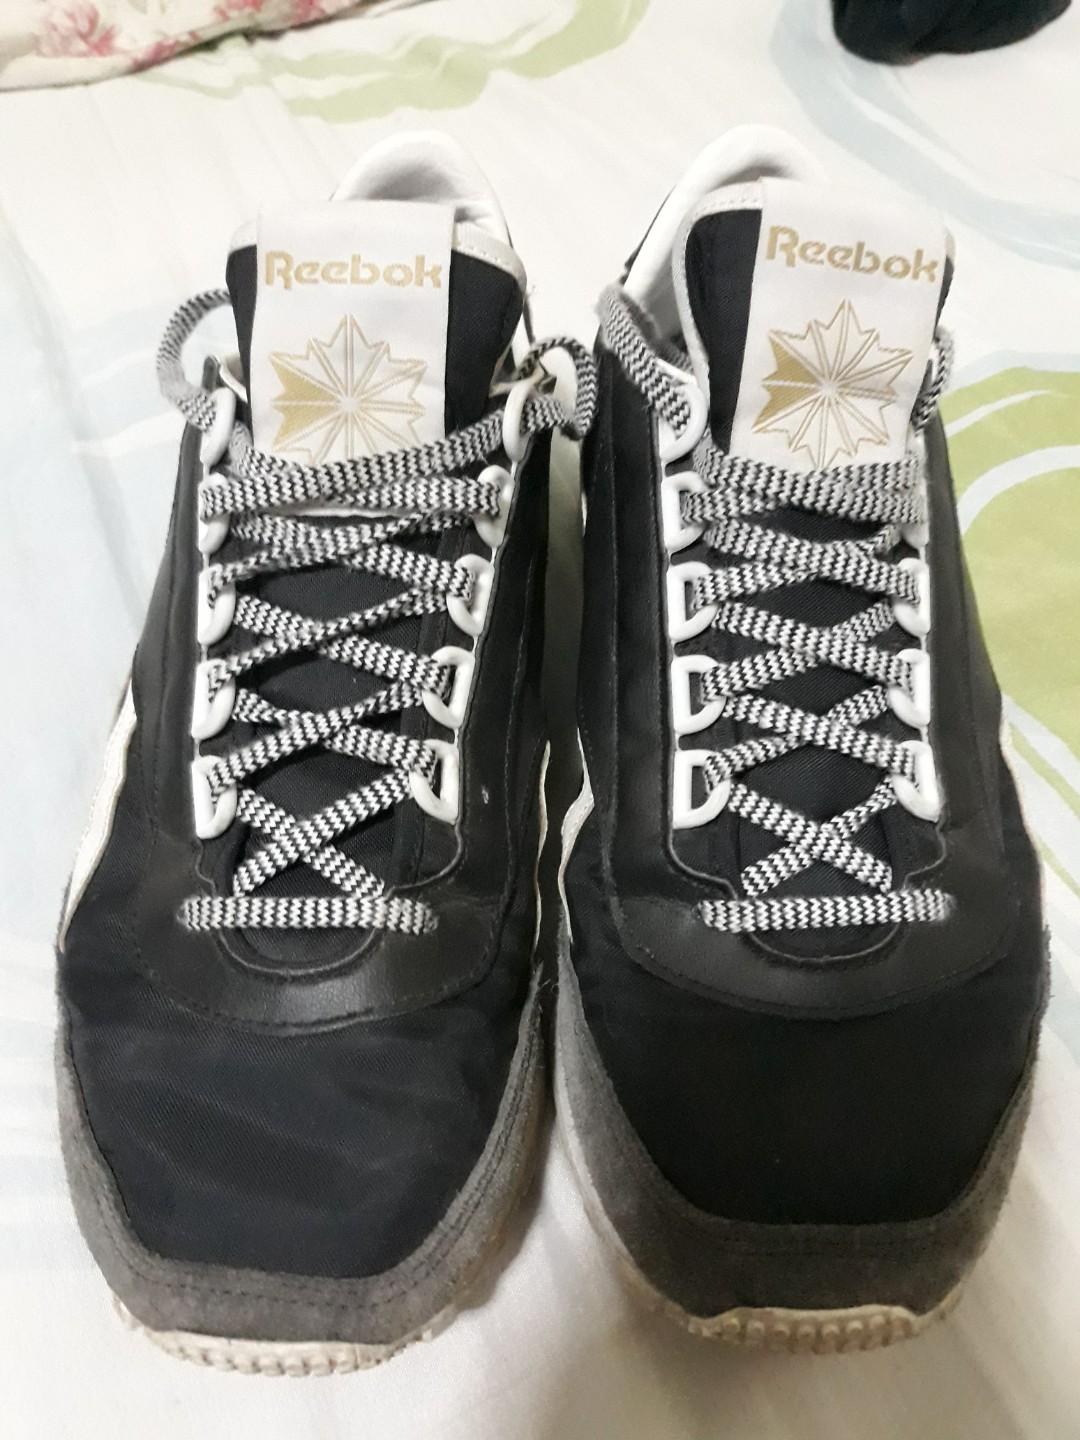 Reebok Athlete's Shoe Size 8.5US Men 